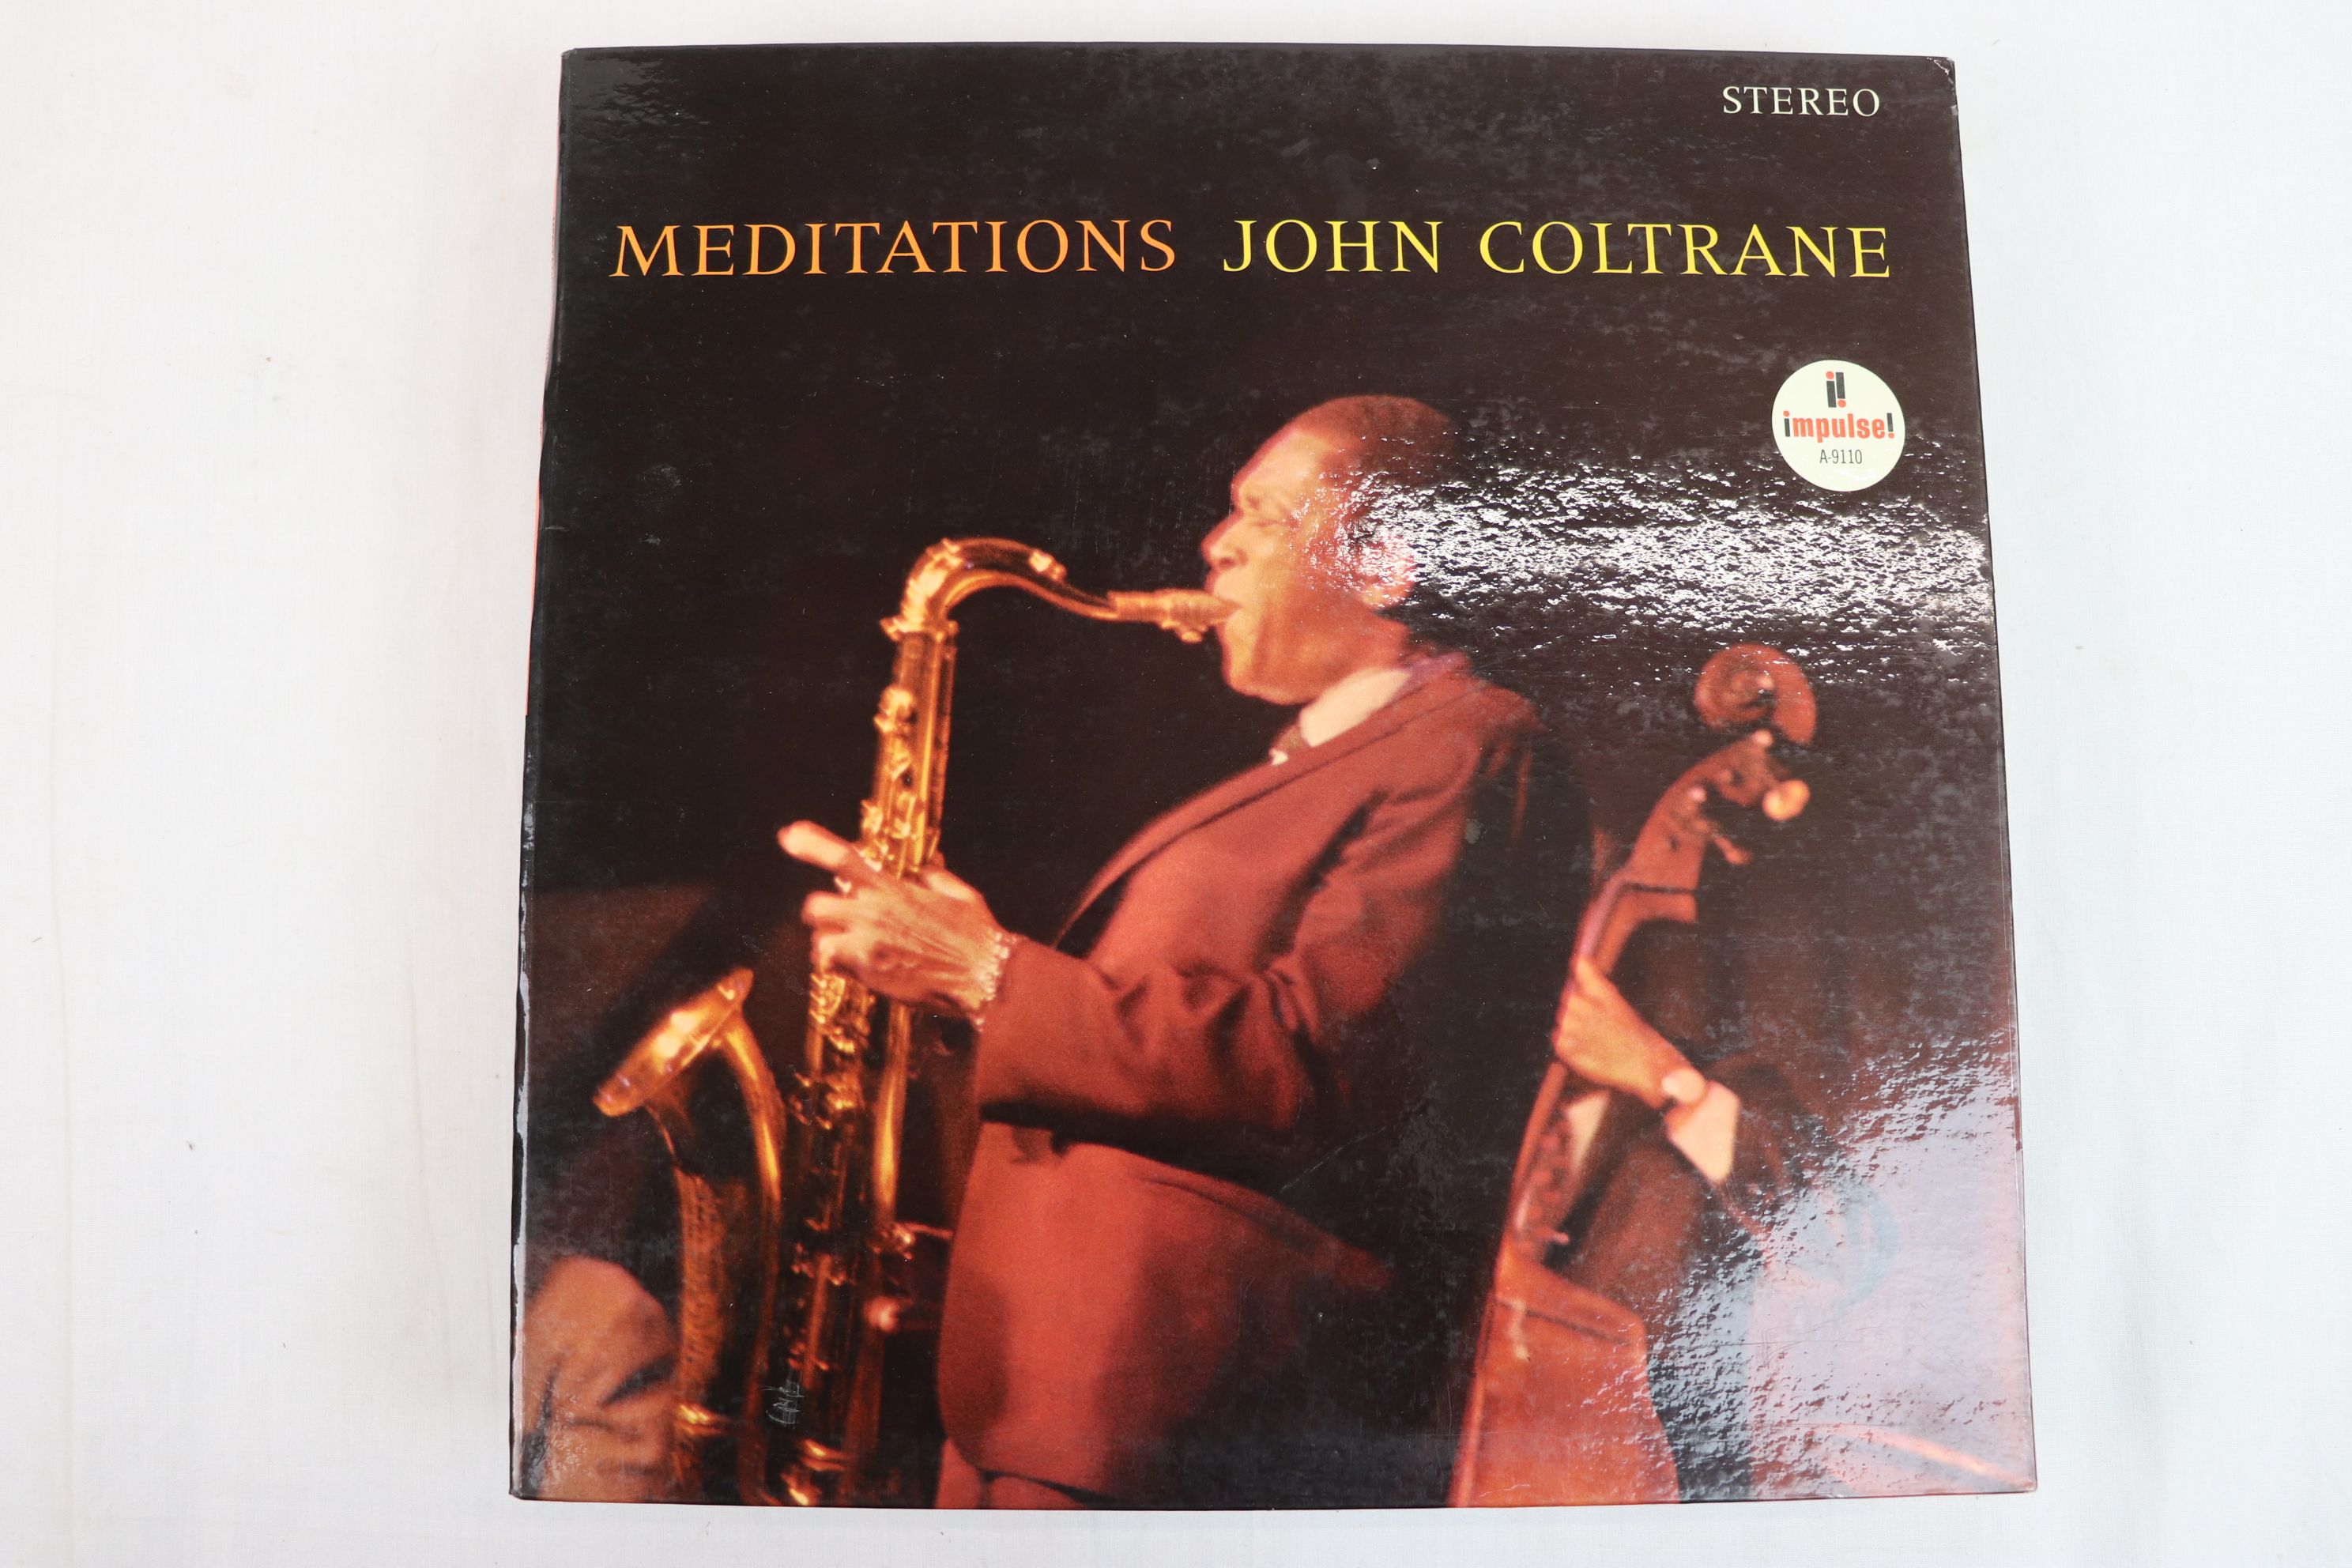 Vinyl - Collection of 15 x Jazz vinyl LP's to include Meditations - John Coltrane (Impulse A- - Image 3 of 17